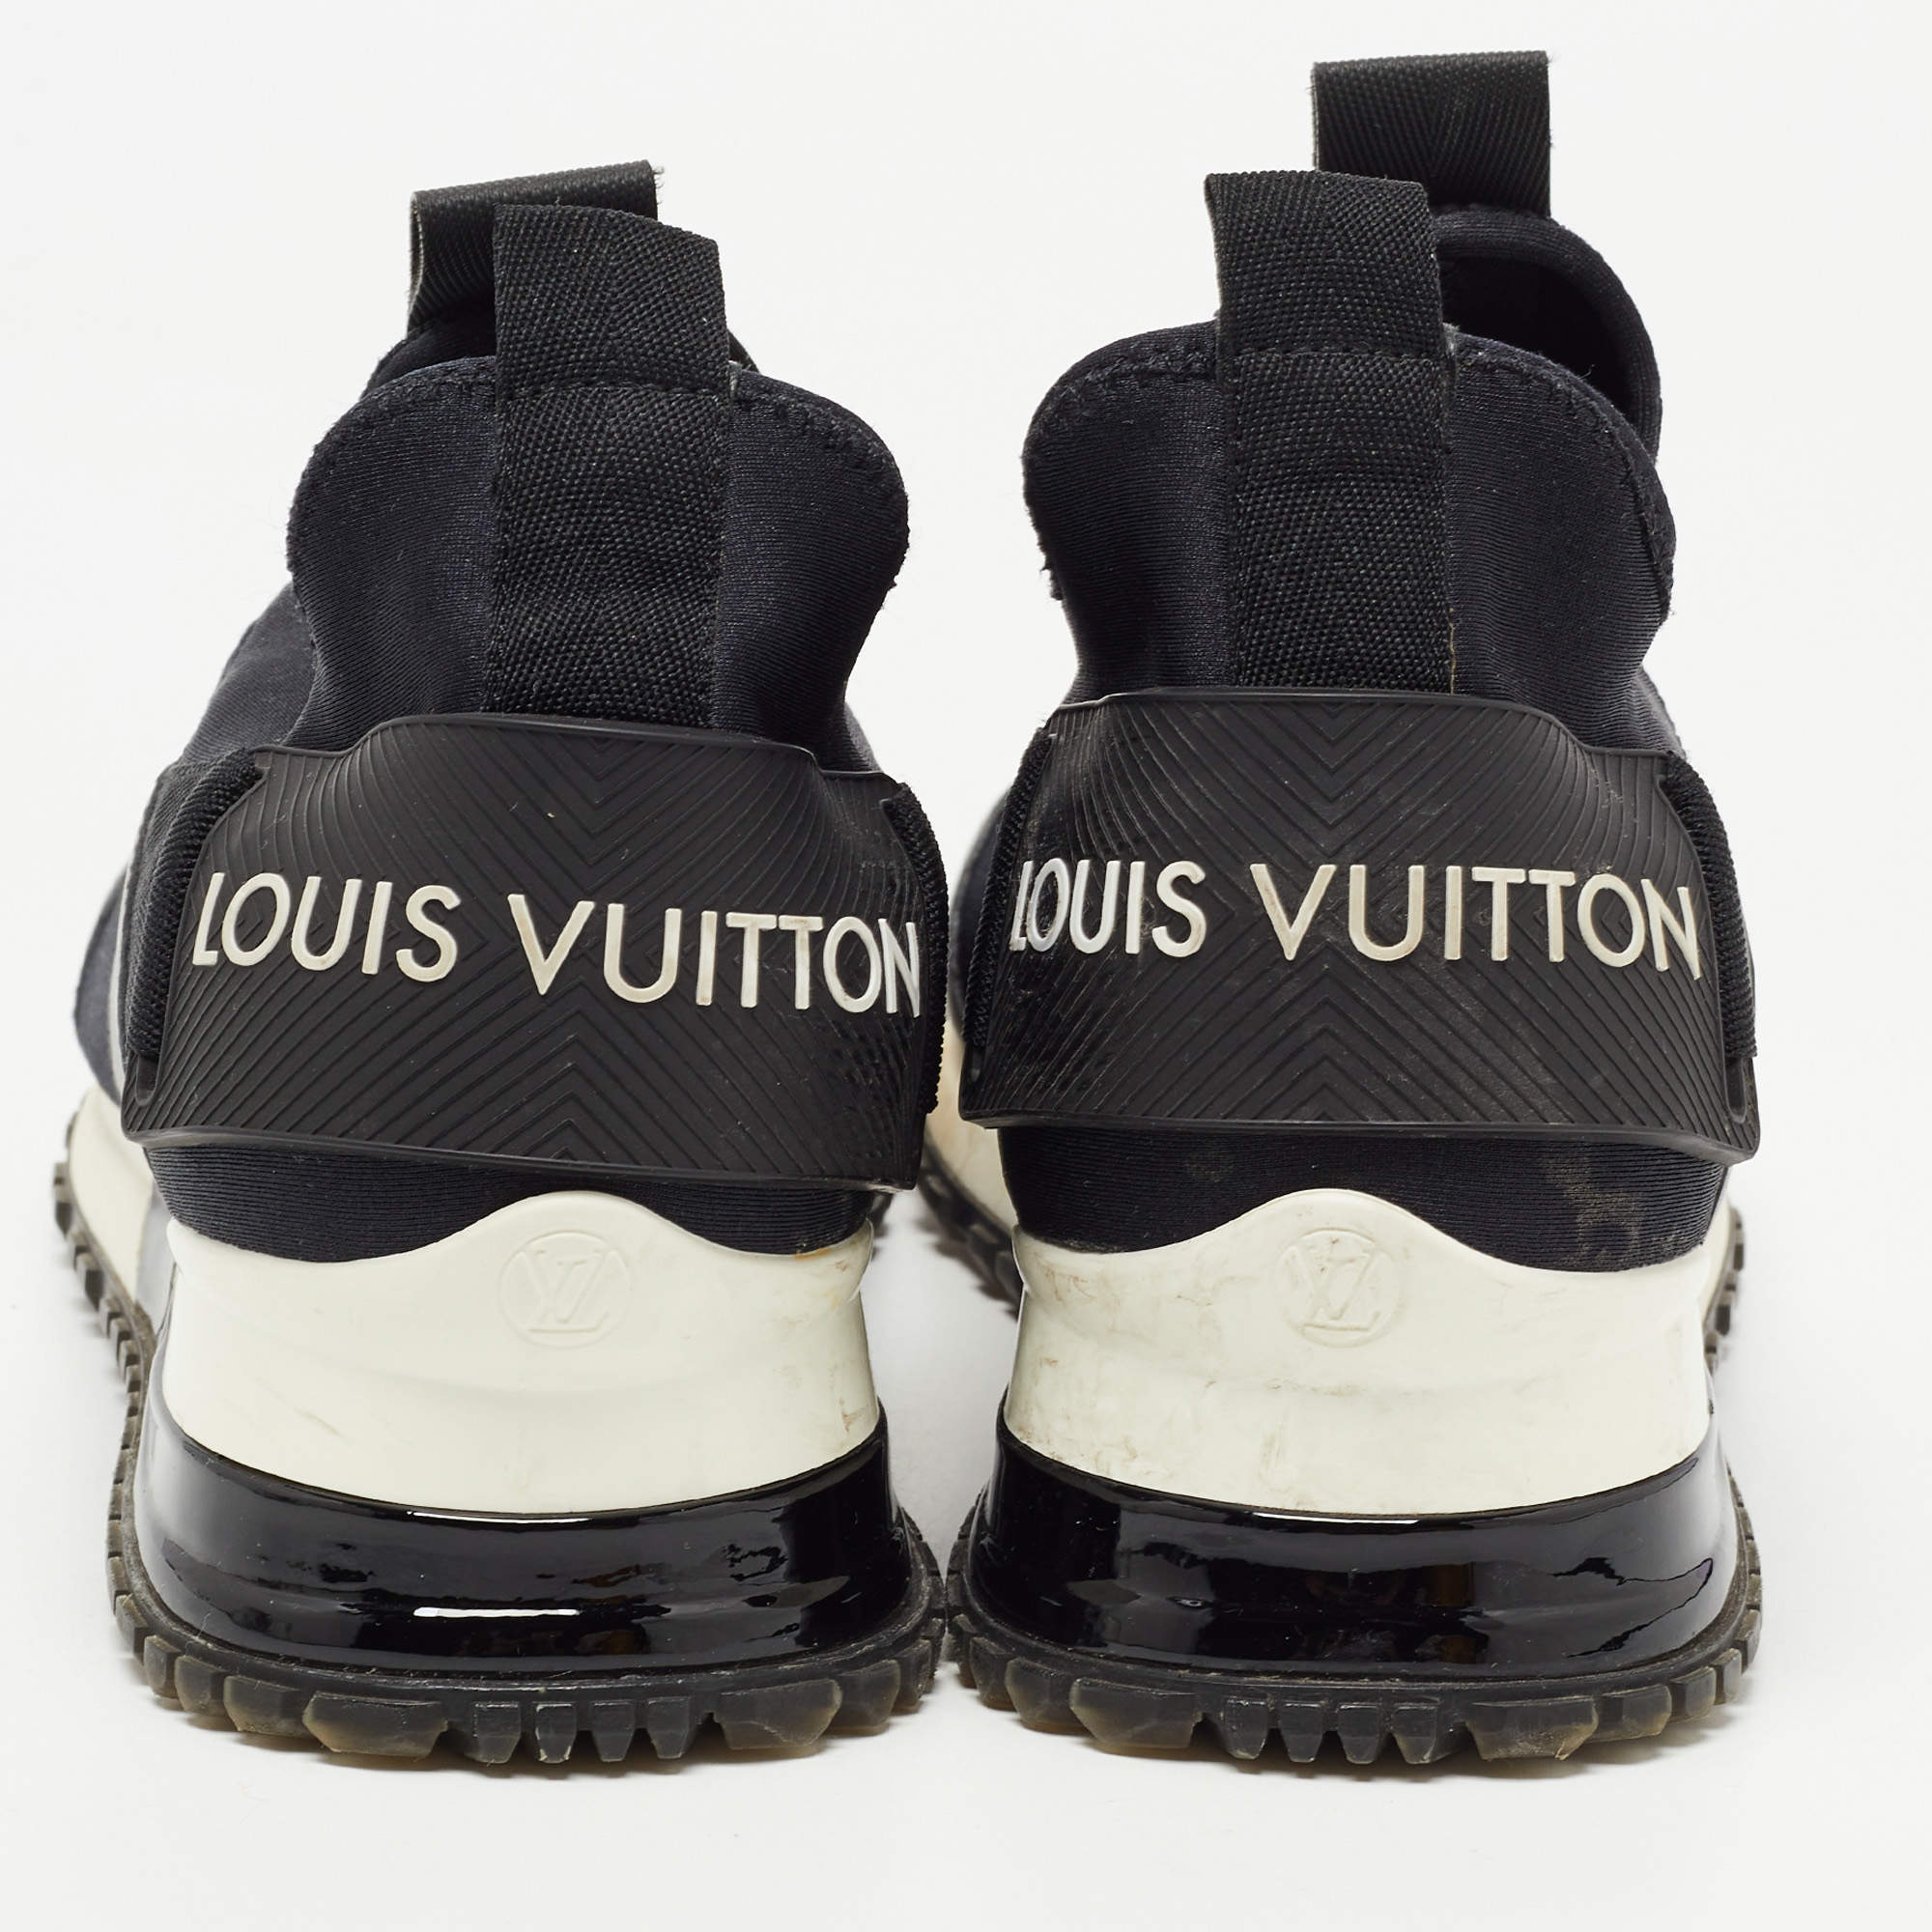 Montant aftergame cloth trainers Louis Vuitton Black size 35.5 IT